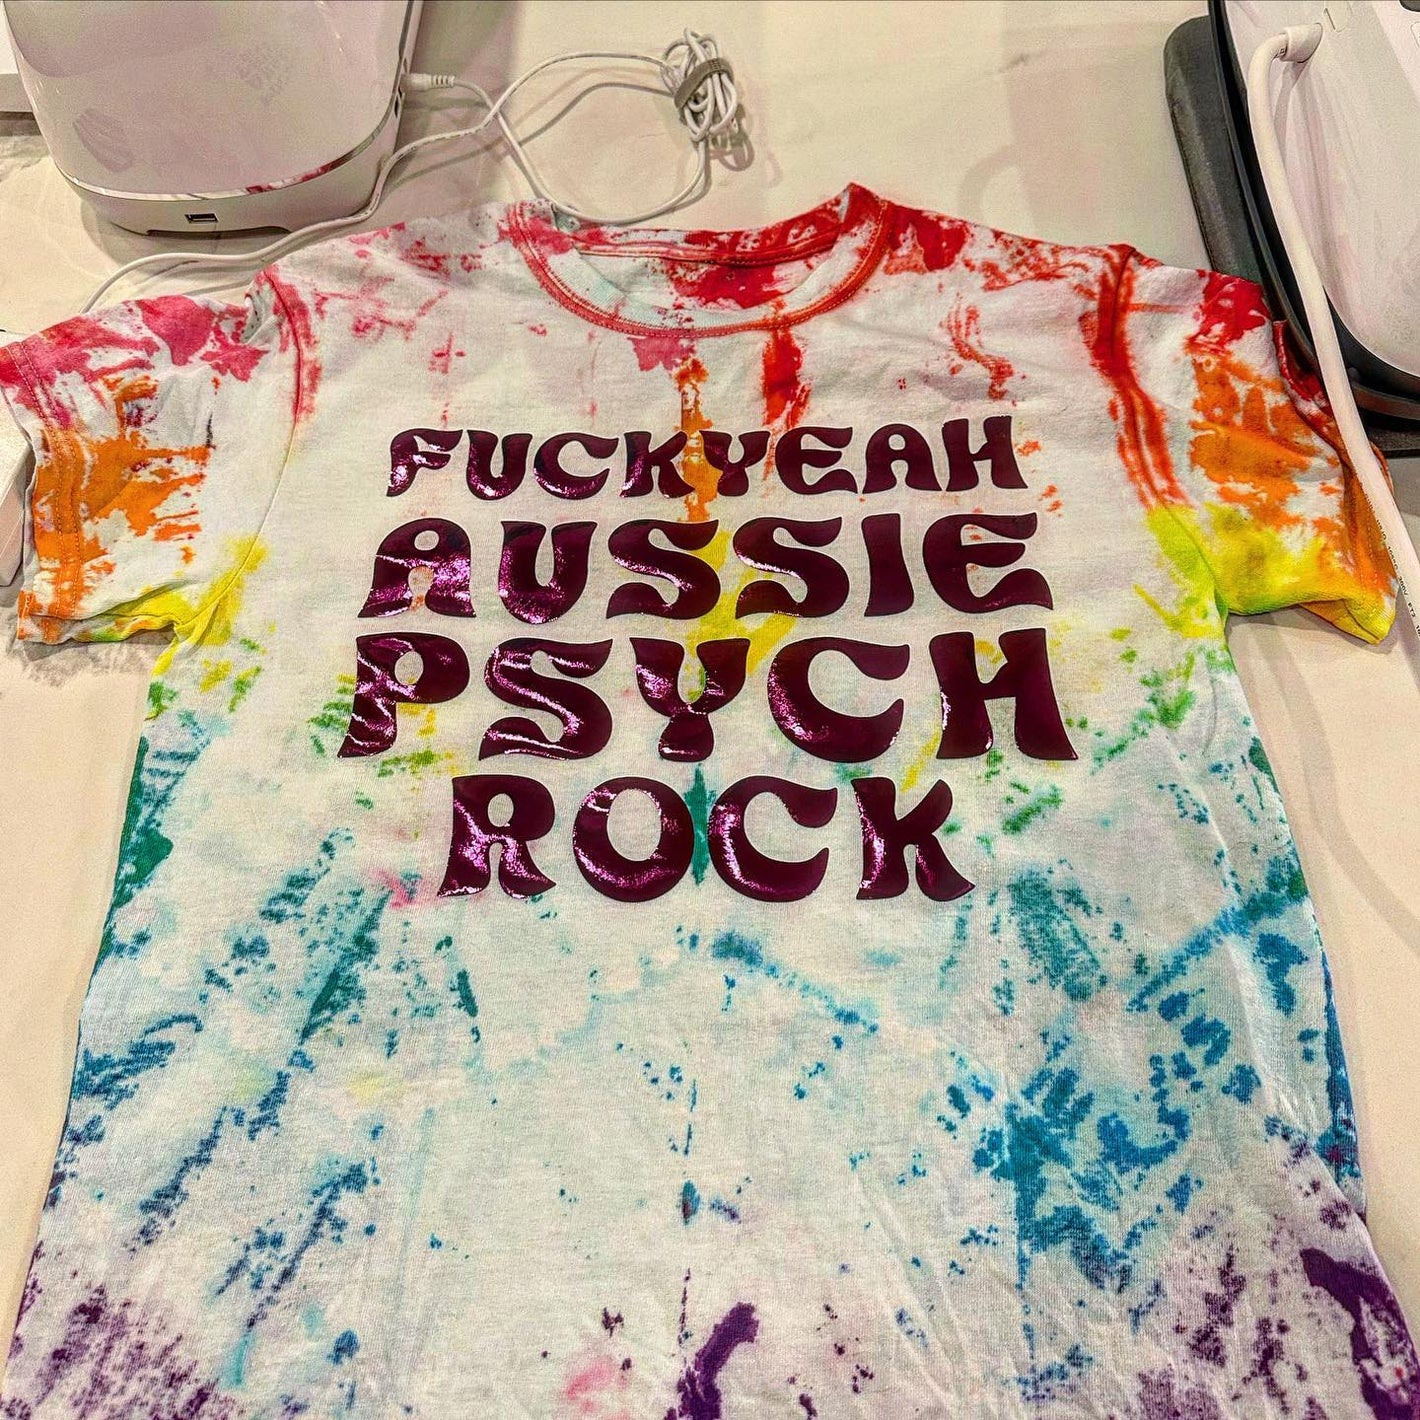 "FUCK YEAH AUSSIE PSYCH ROCK" tie-dye tee